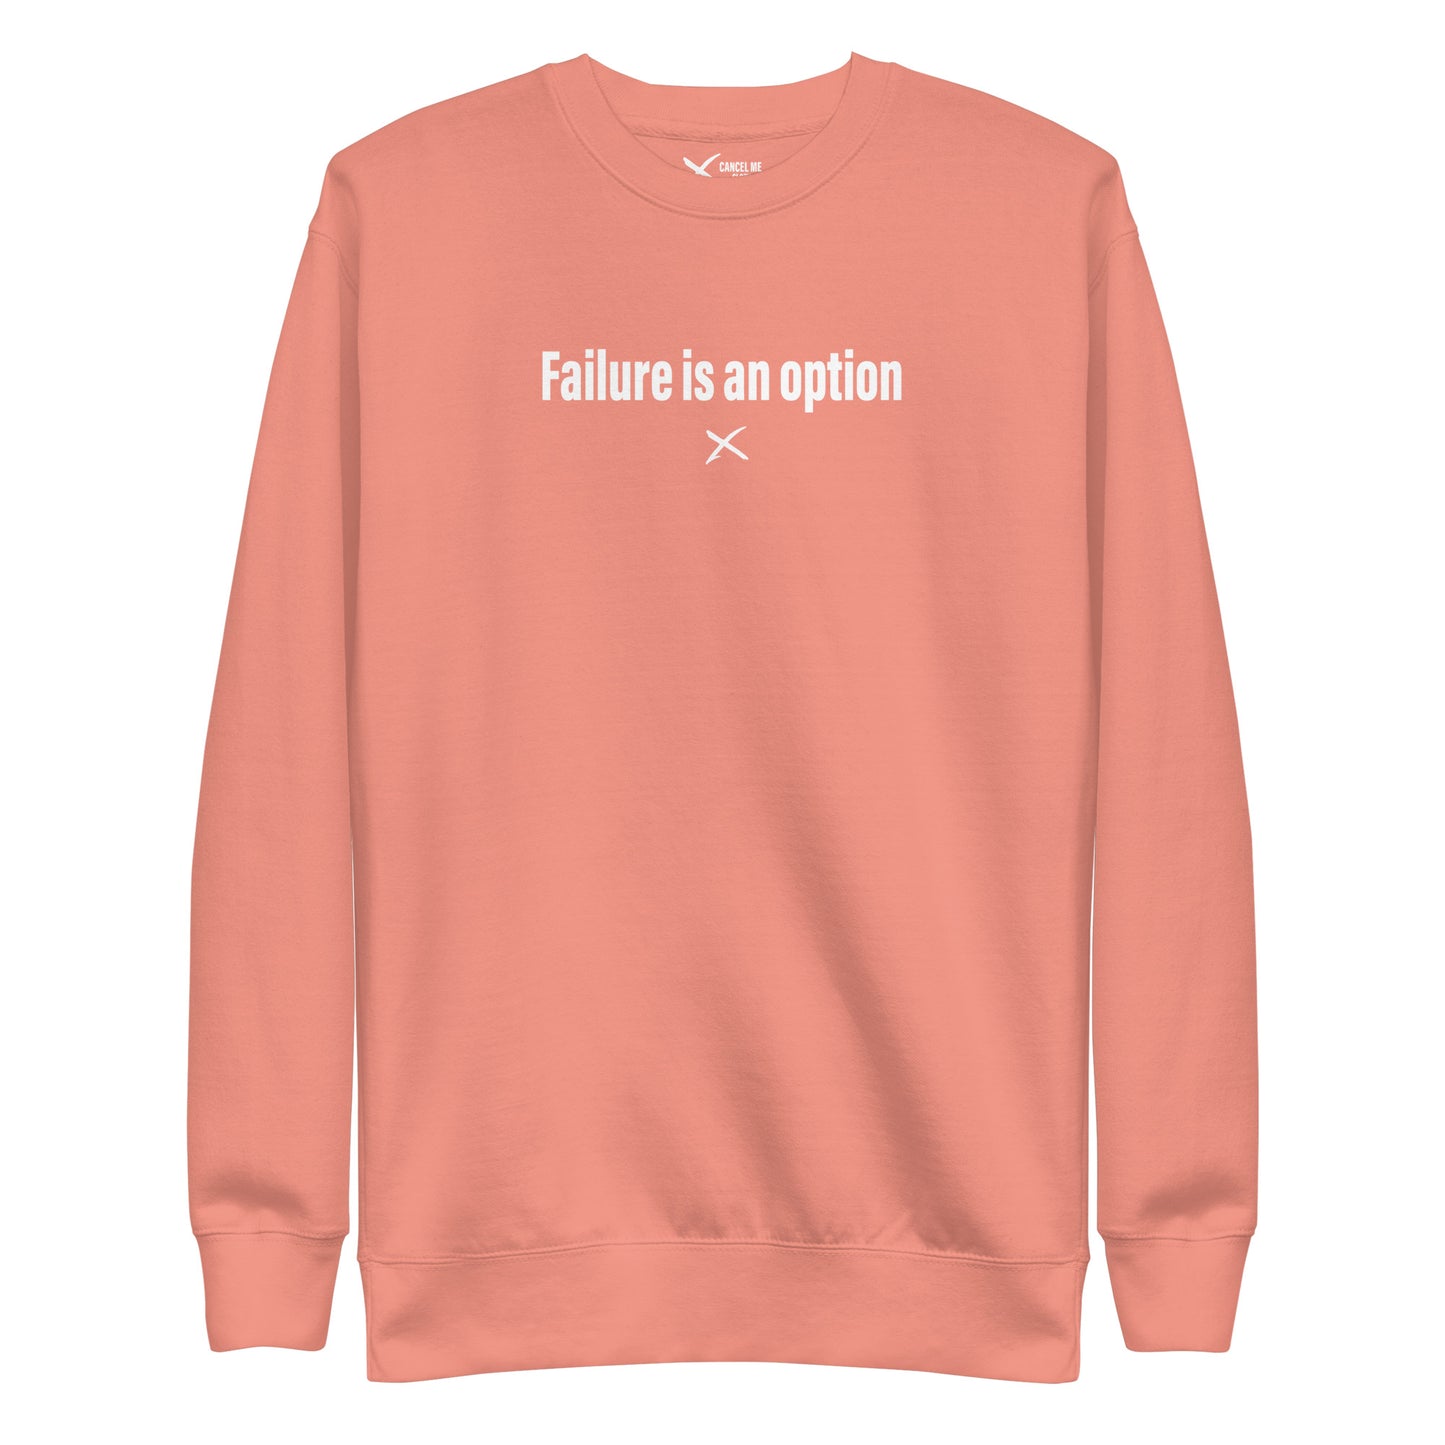 Failure is an option - Sweatshirt